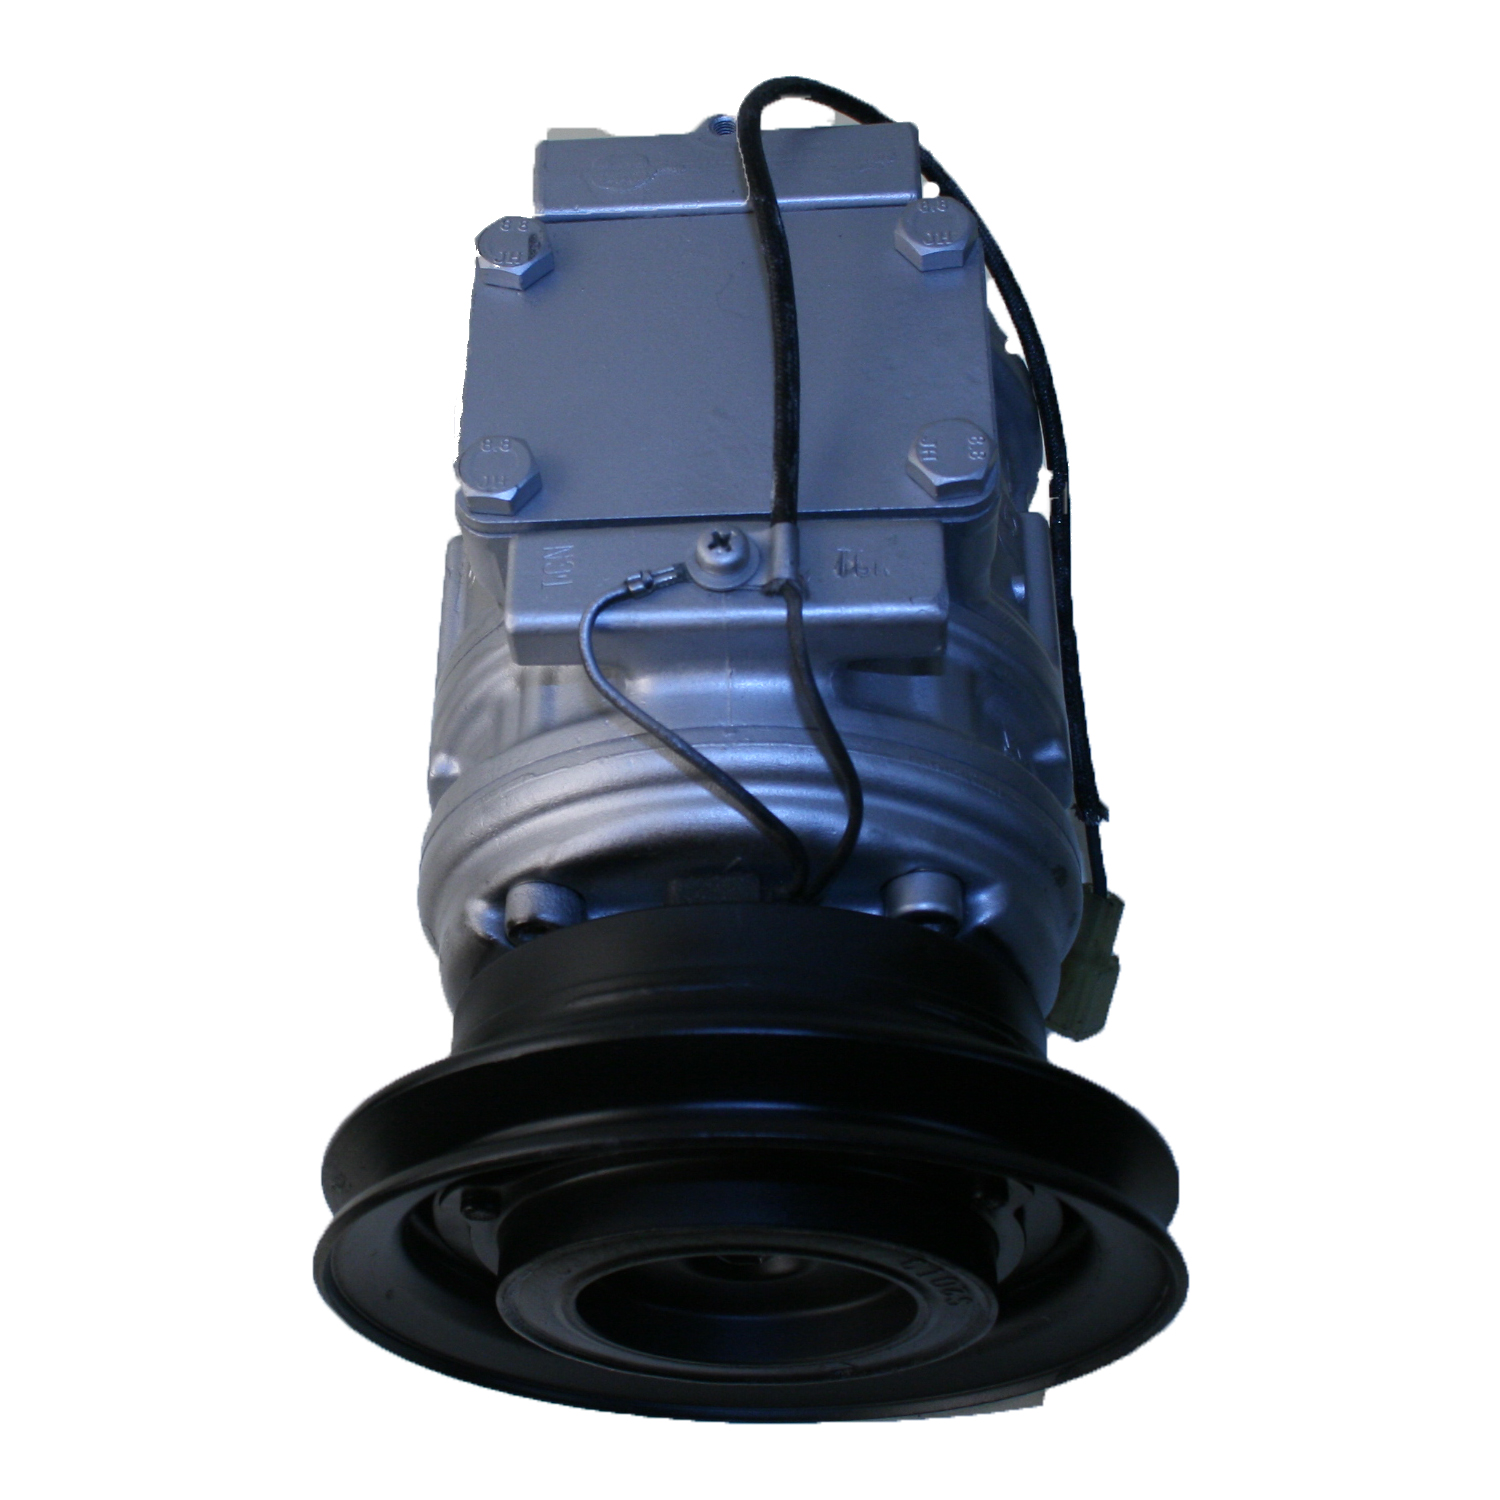 TCW Compressor 31210.105 Remanufactured Product Image field_60b6a13a6e67c